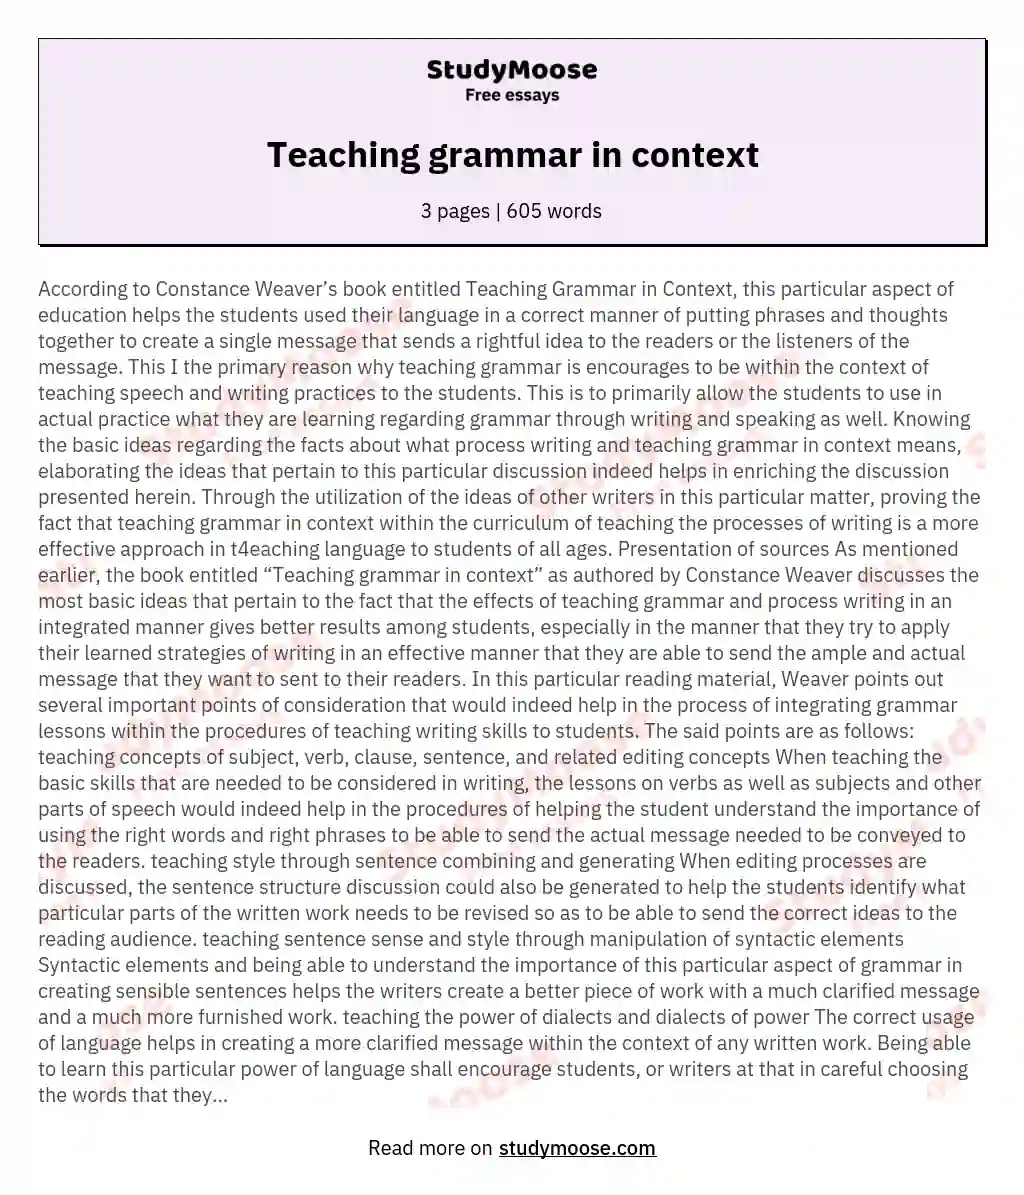 Teaching grammar in context essay